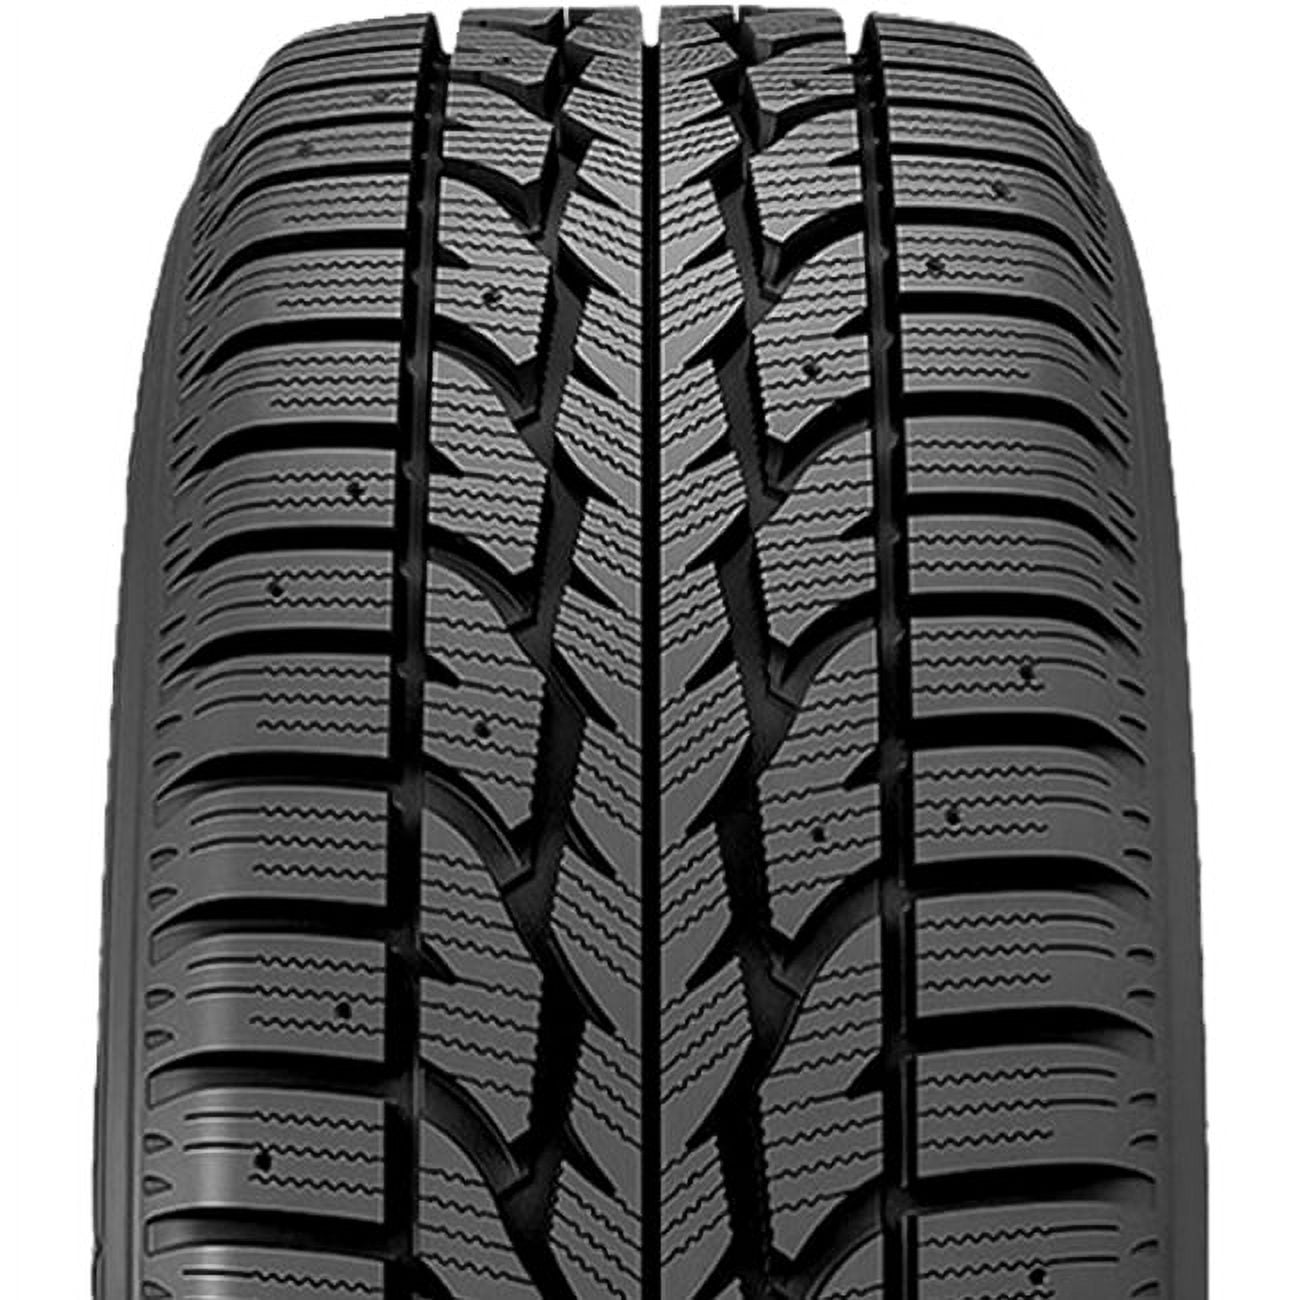 Winterforce Winter Tire Snow 215/55R16 One Firestone 1 New 93S 2 New